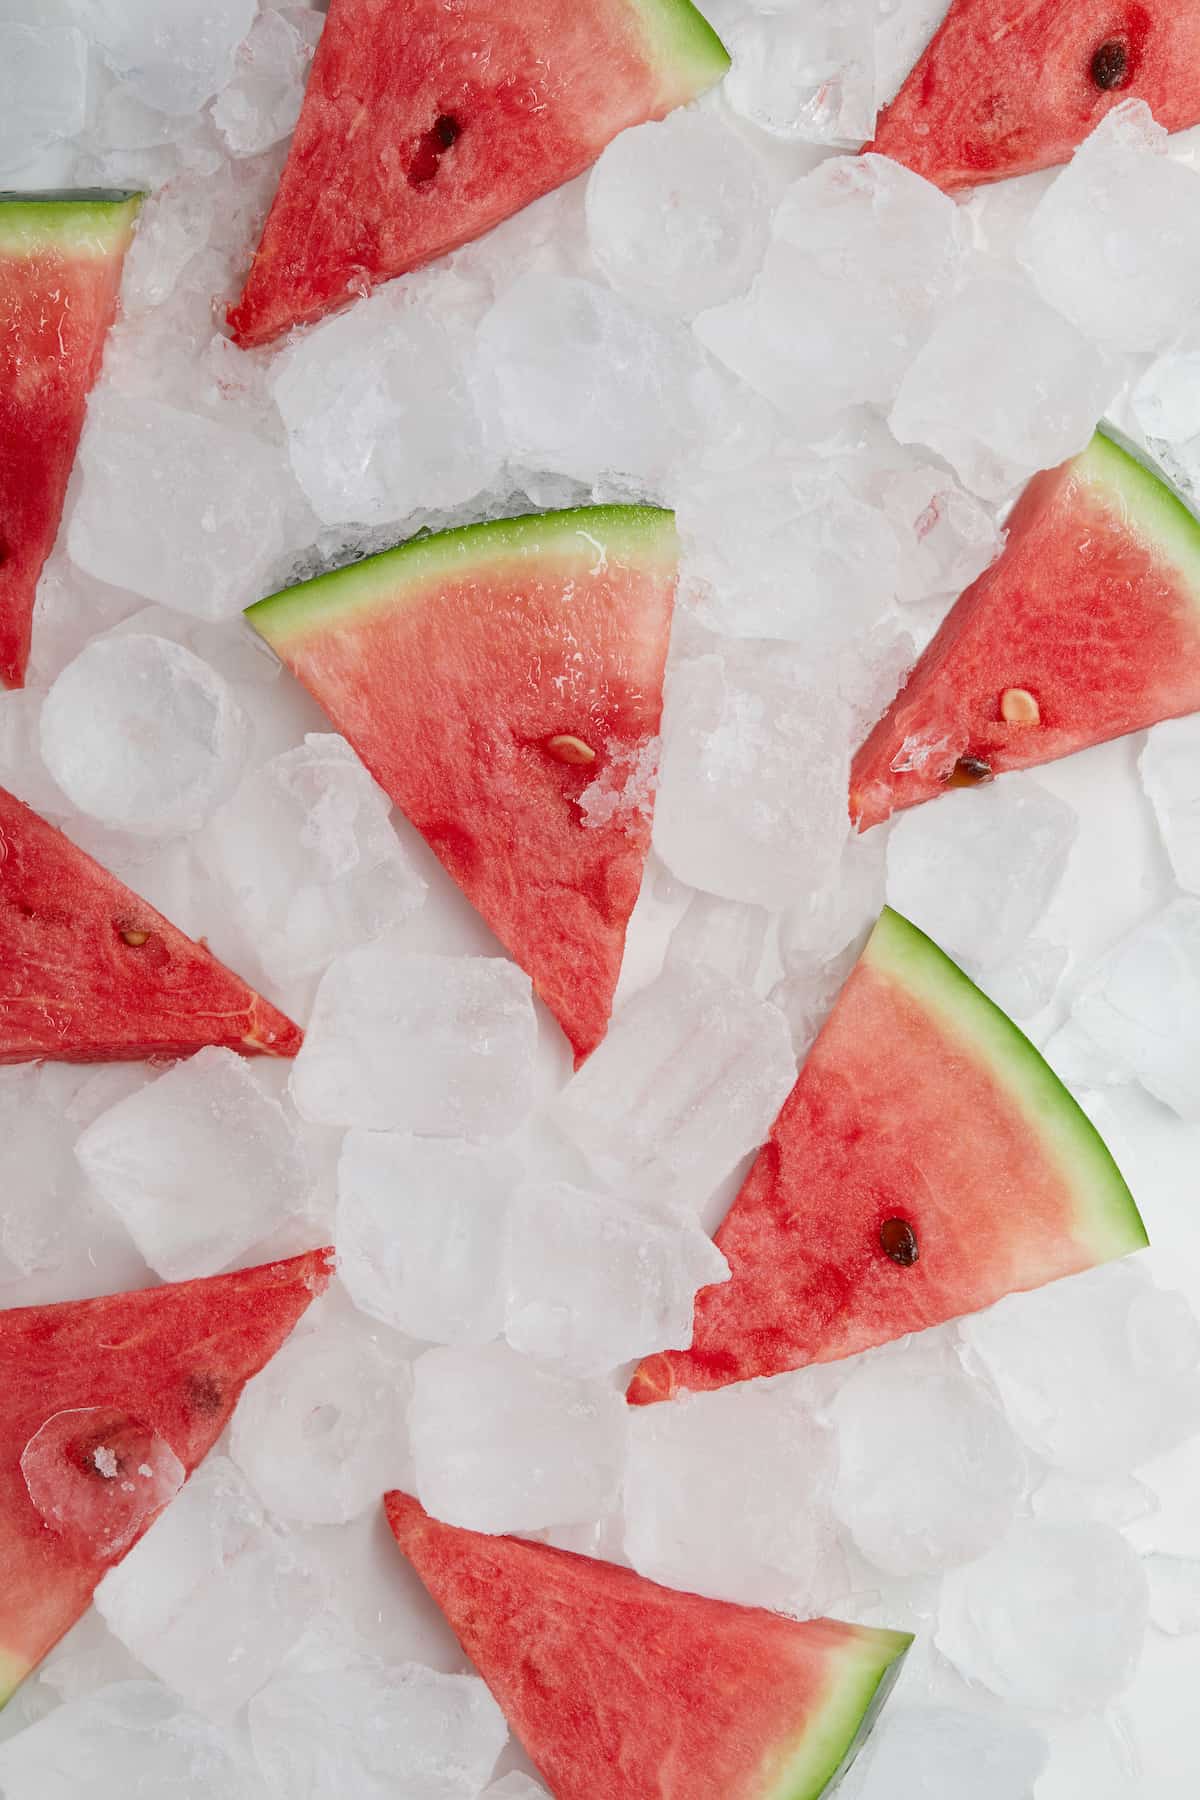 Easy, Healthy Watermelon Recipes